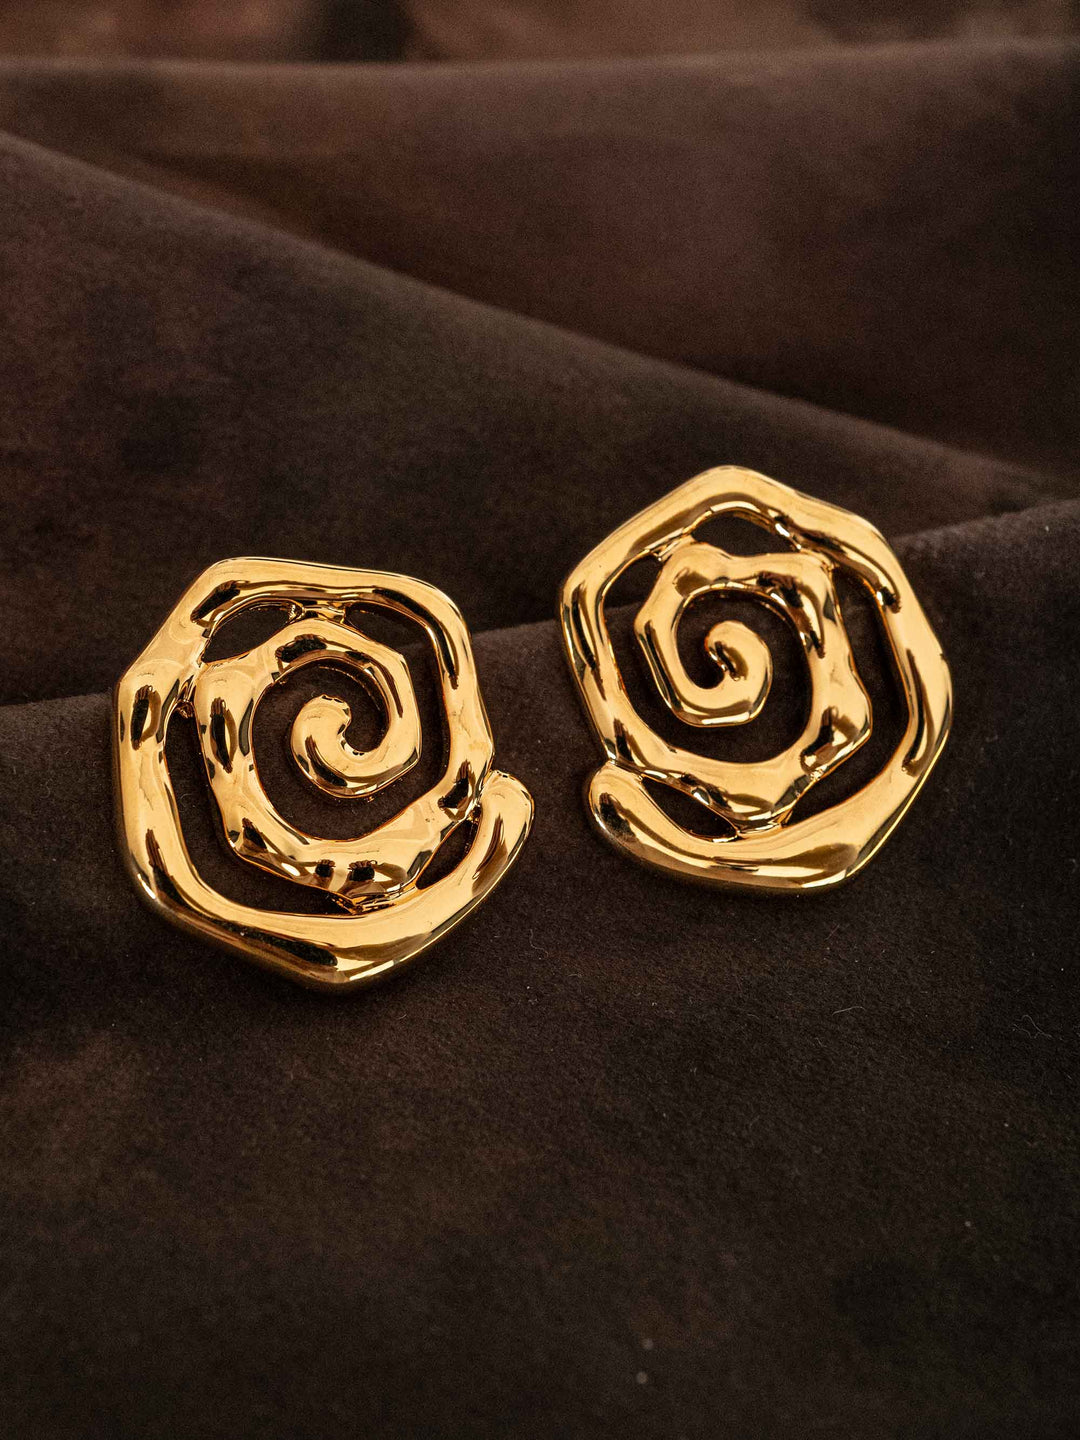 One gold openwork earring